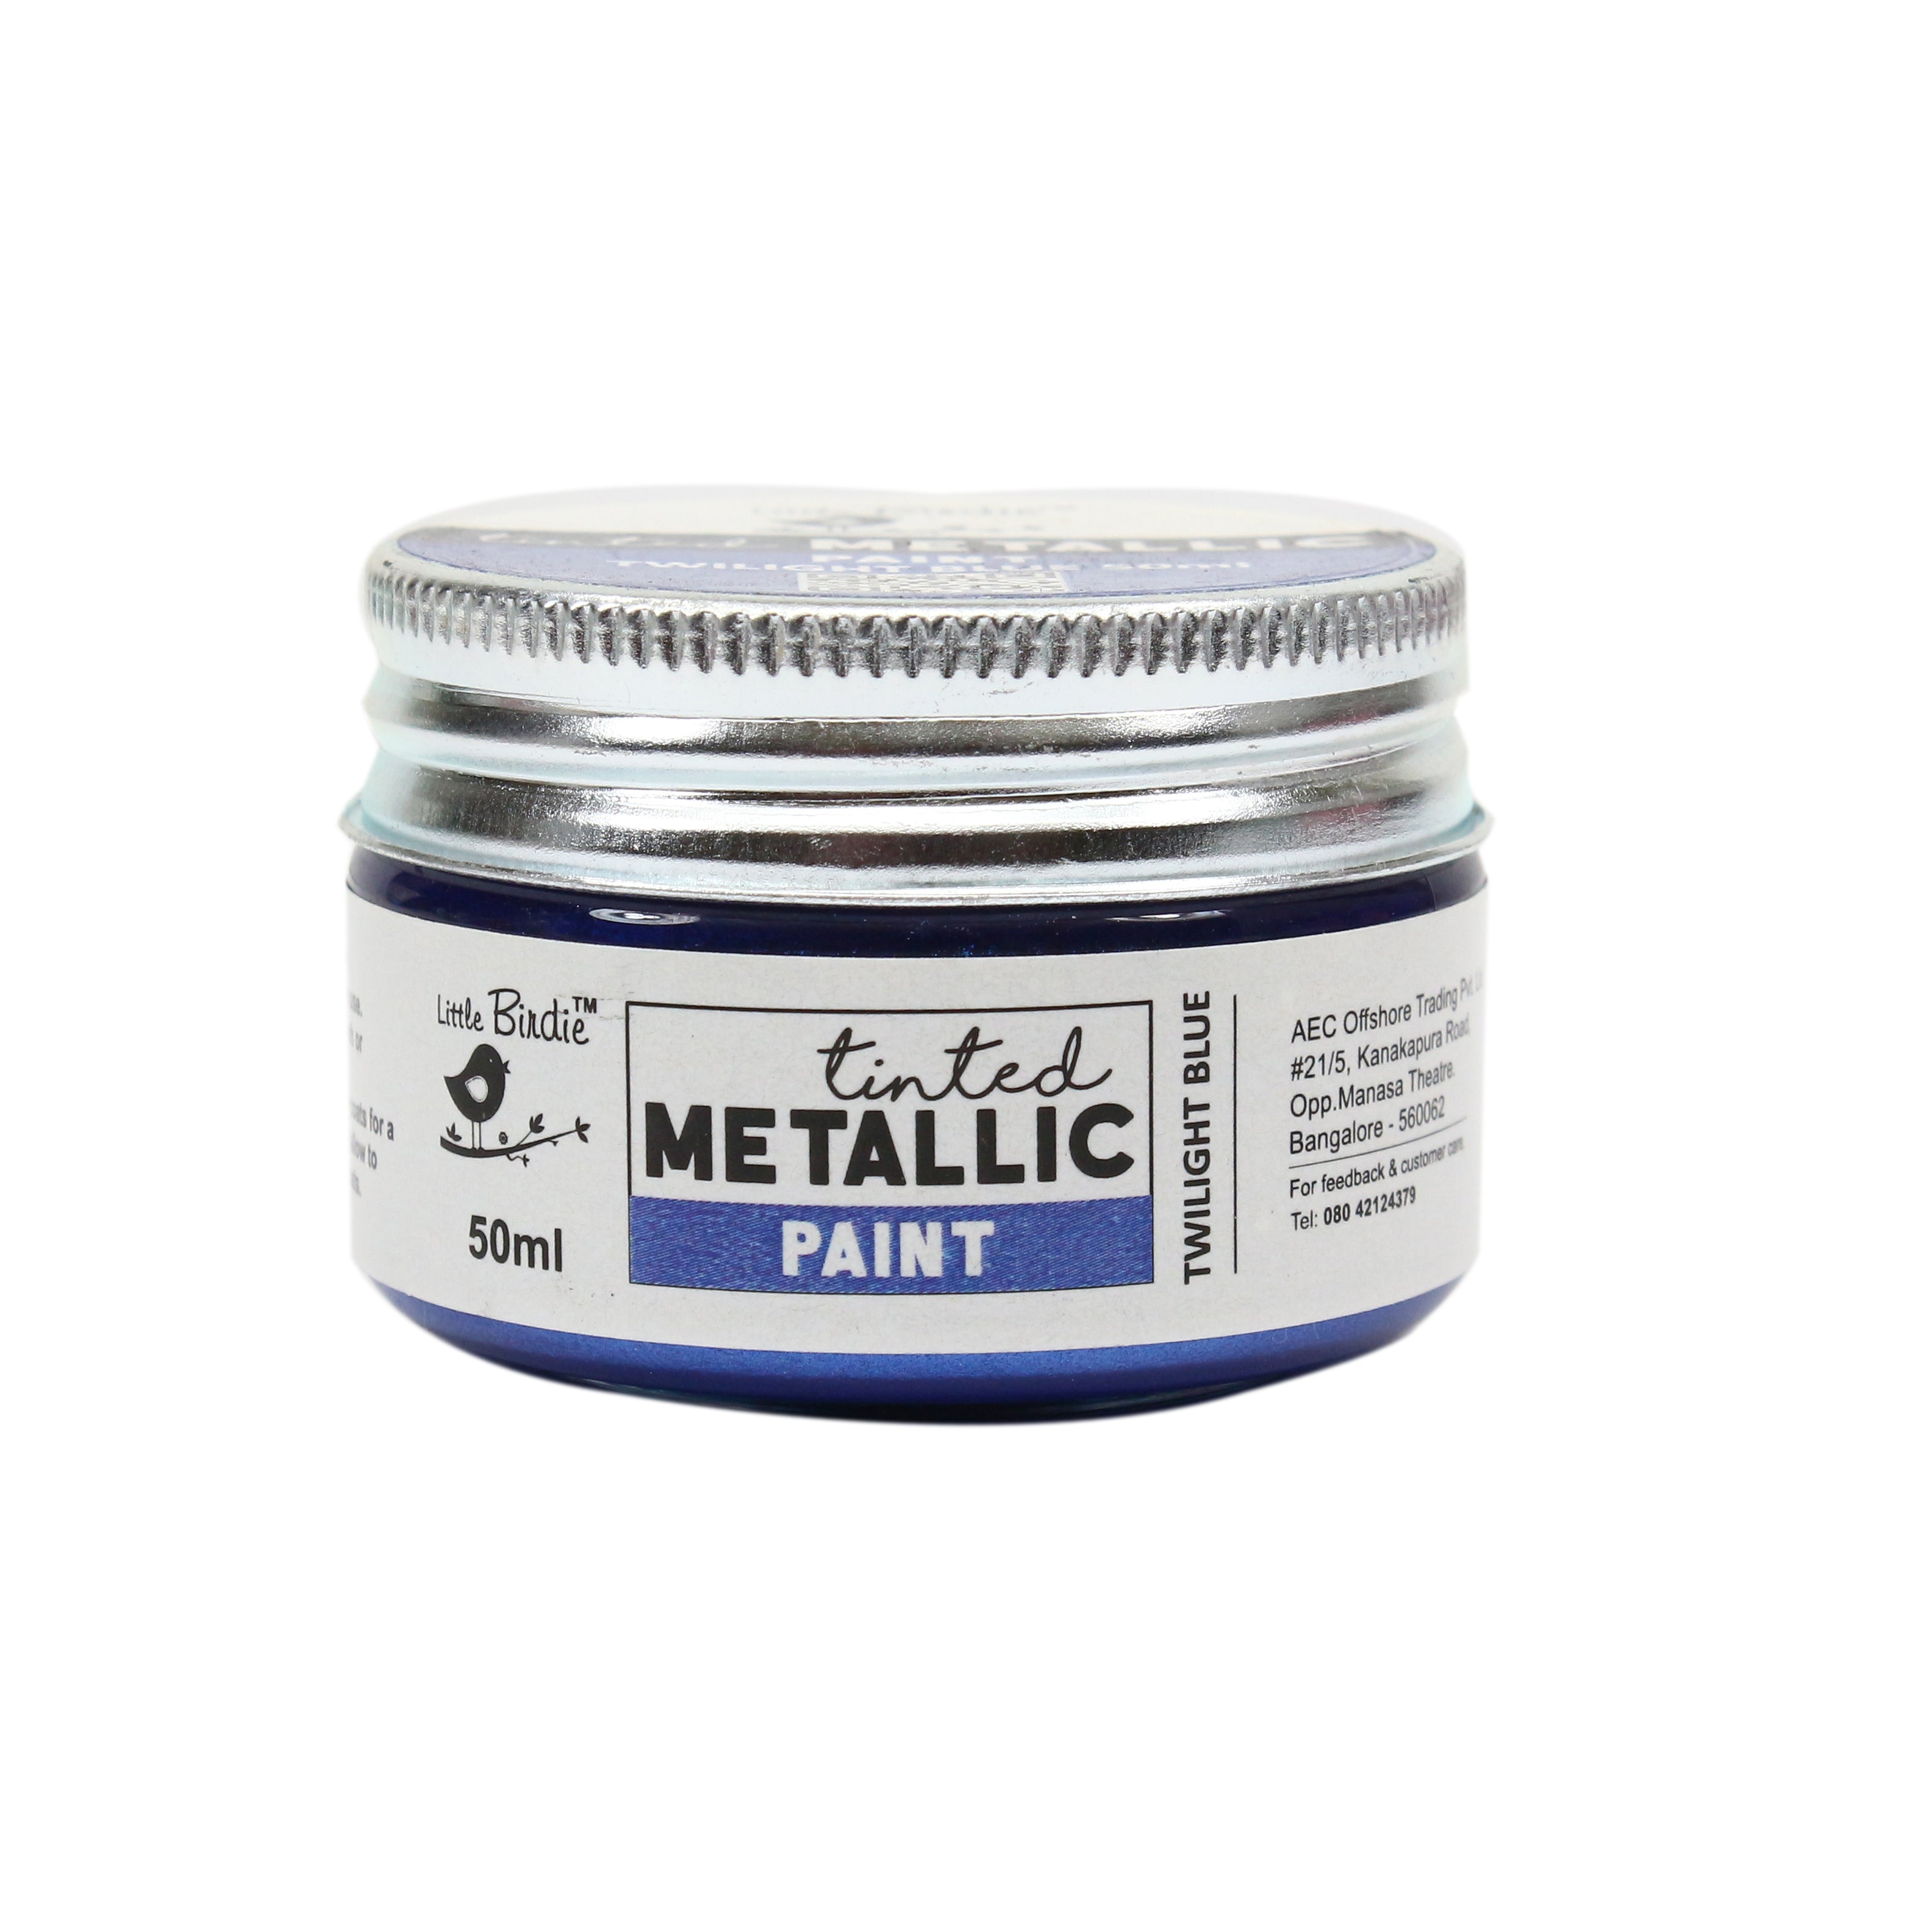 Tinted Metallic Paint Carribean Teal Bottle-50Ml